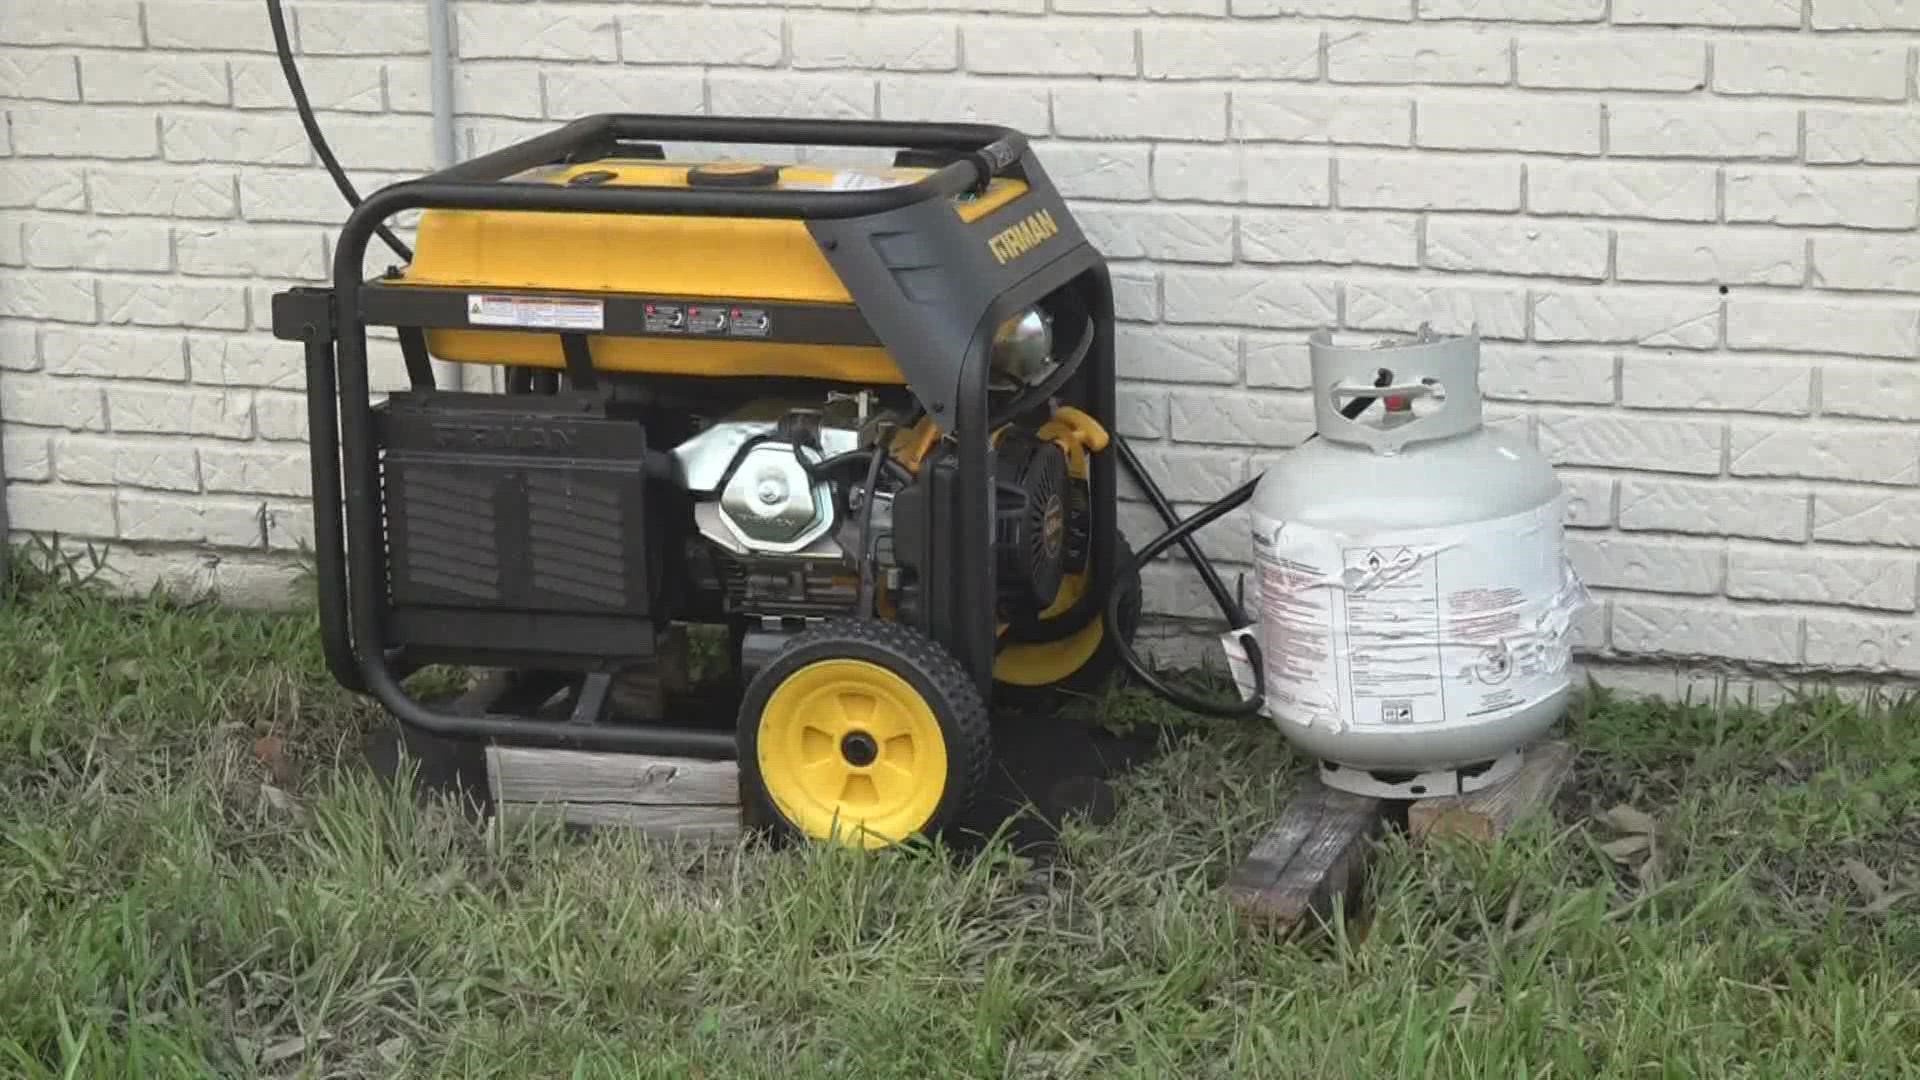 Generator safety tips after Hurricane ida